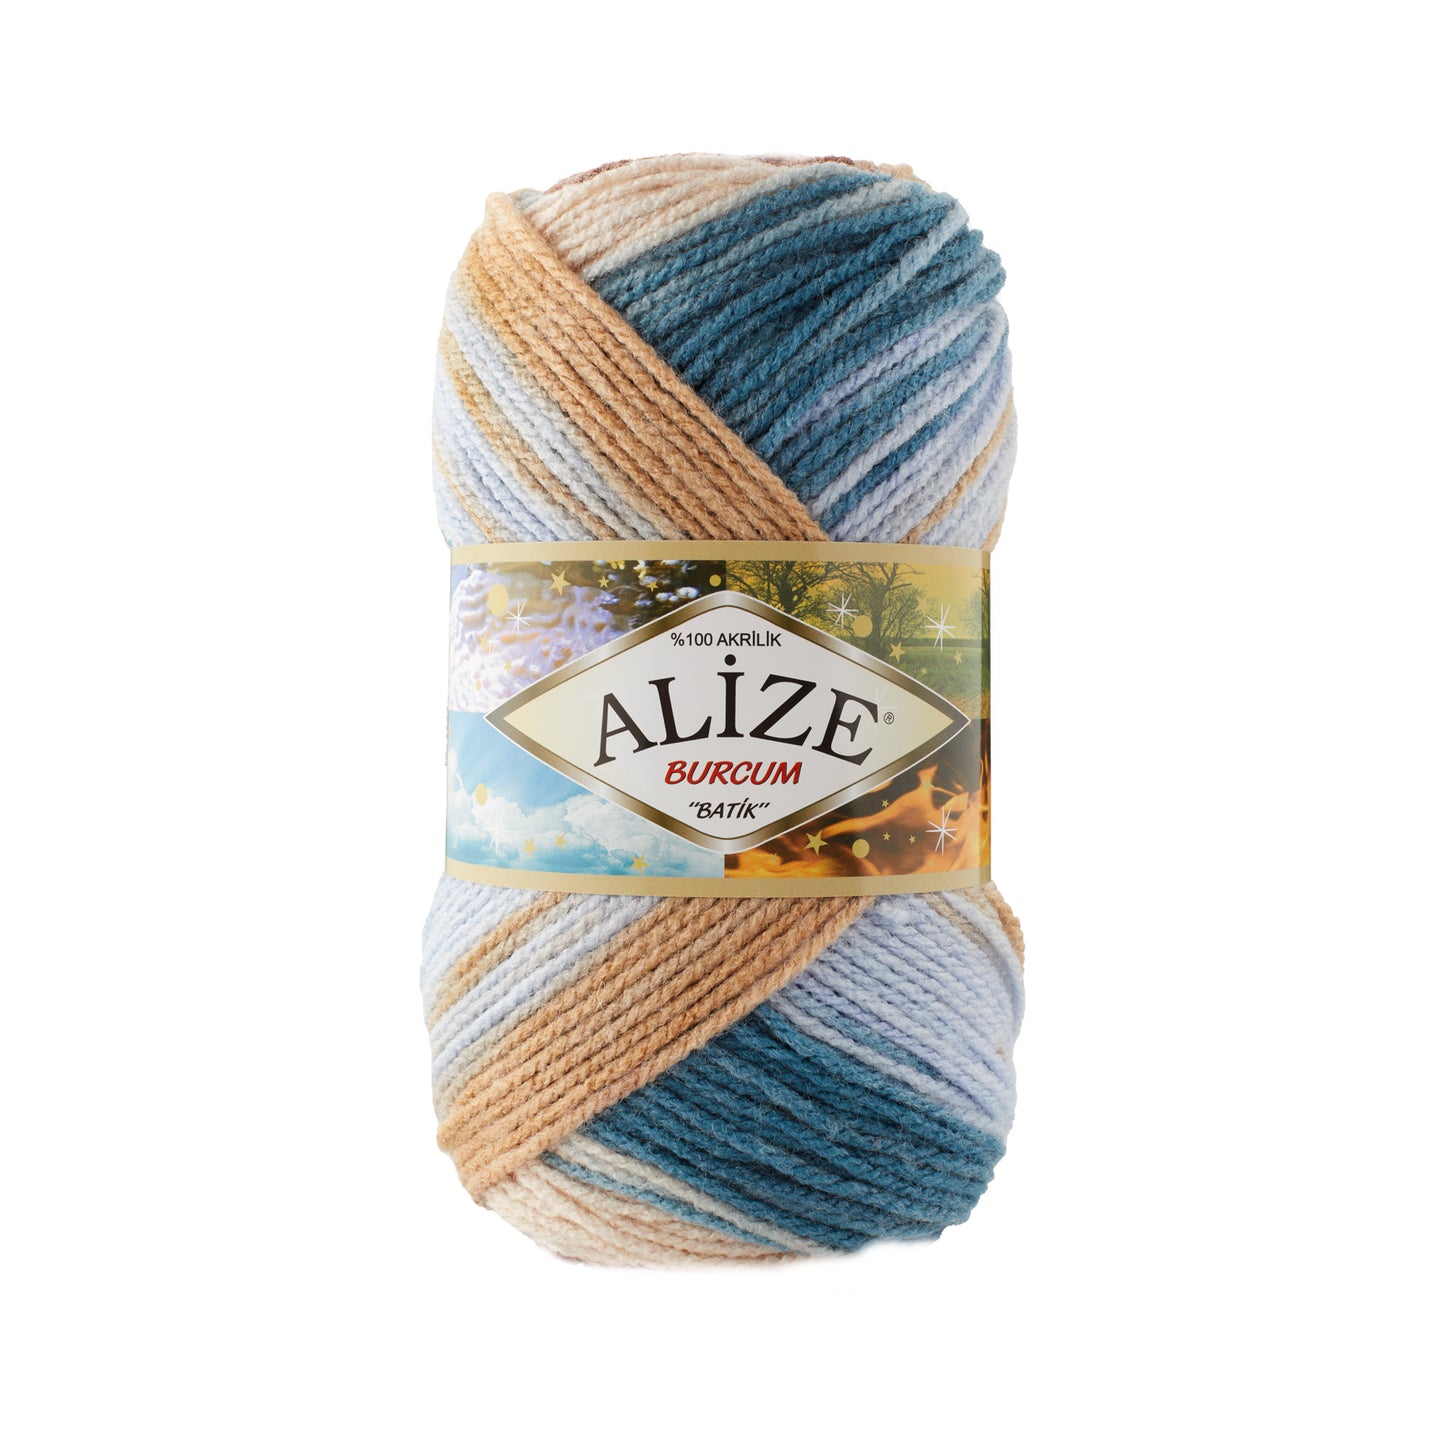 Alize Burcum Batik knitting yarn 100g (acrylic)